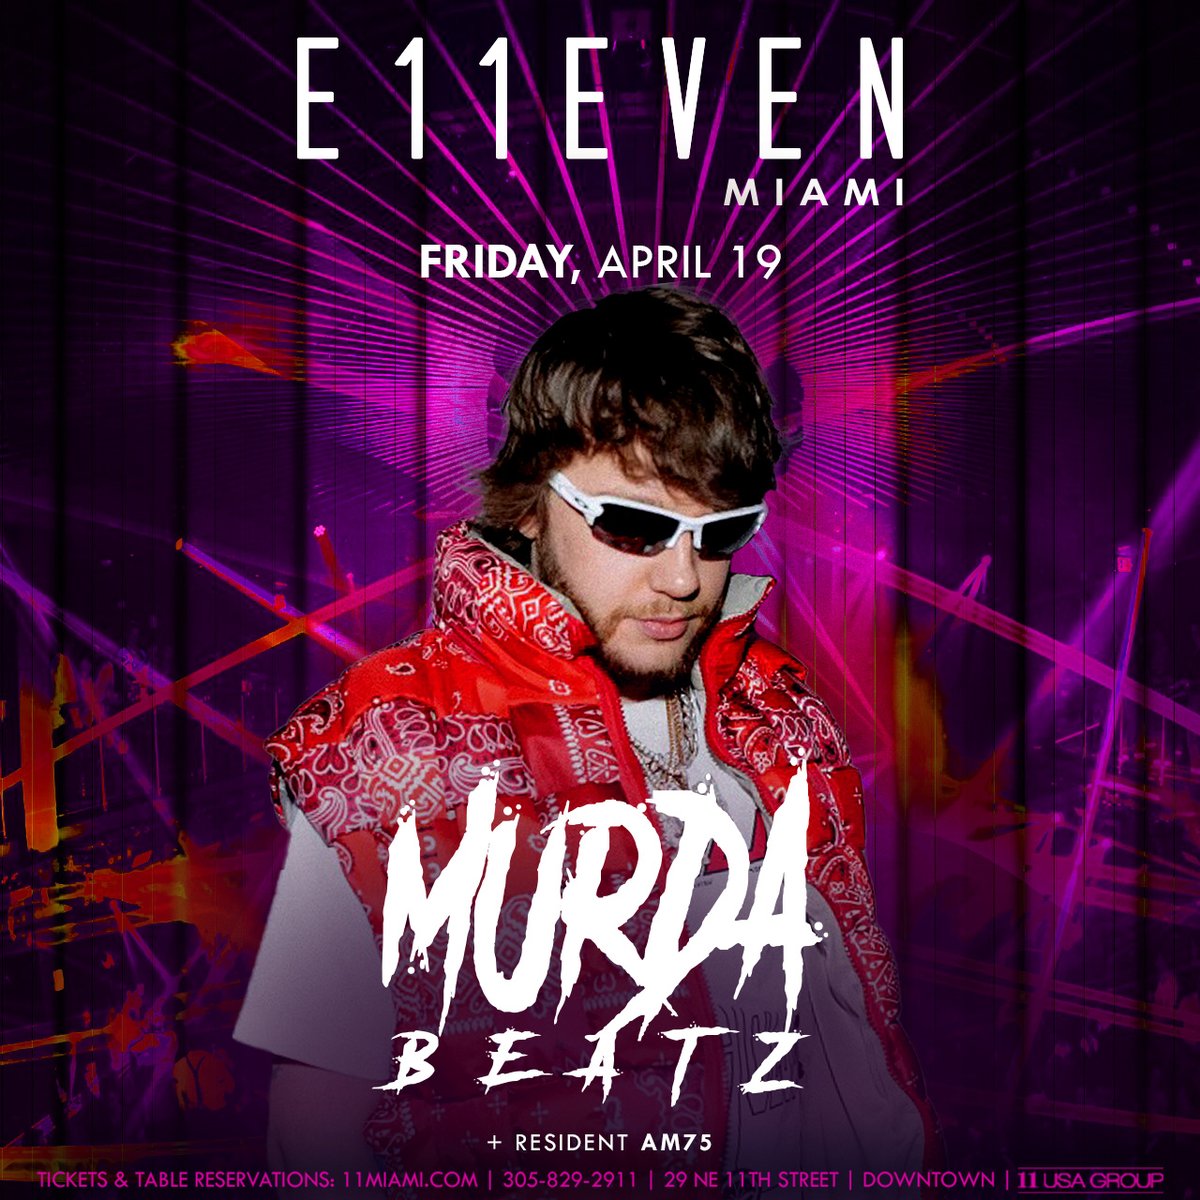 Murda on the beat so it's not nice ⚡️ @murdabeatz at #11miami on Friday, April 19th Tickets & Tables link in bio | 11miami.com #E11EVEN #Miami #MurdaBeatz